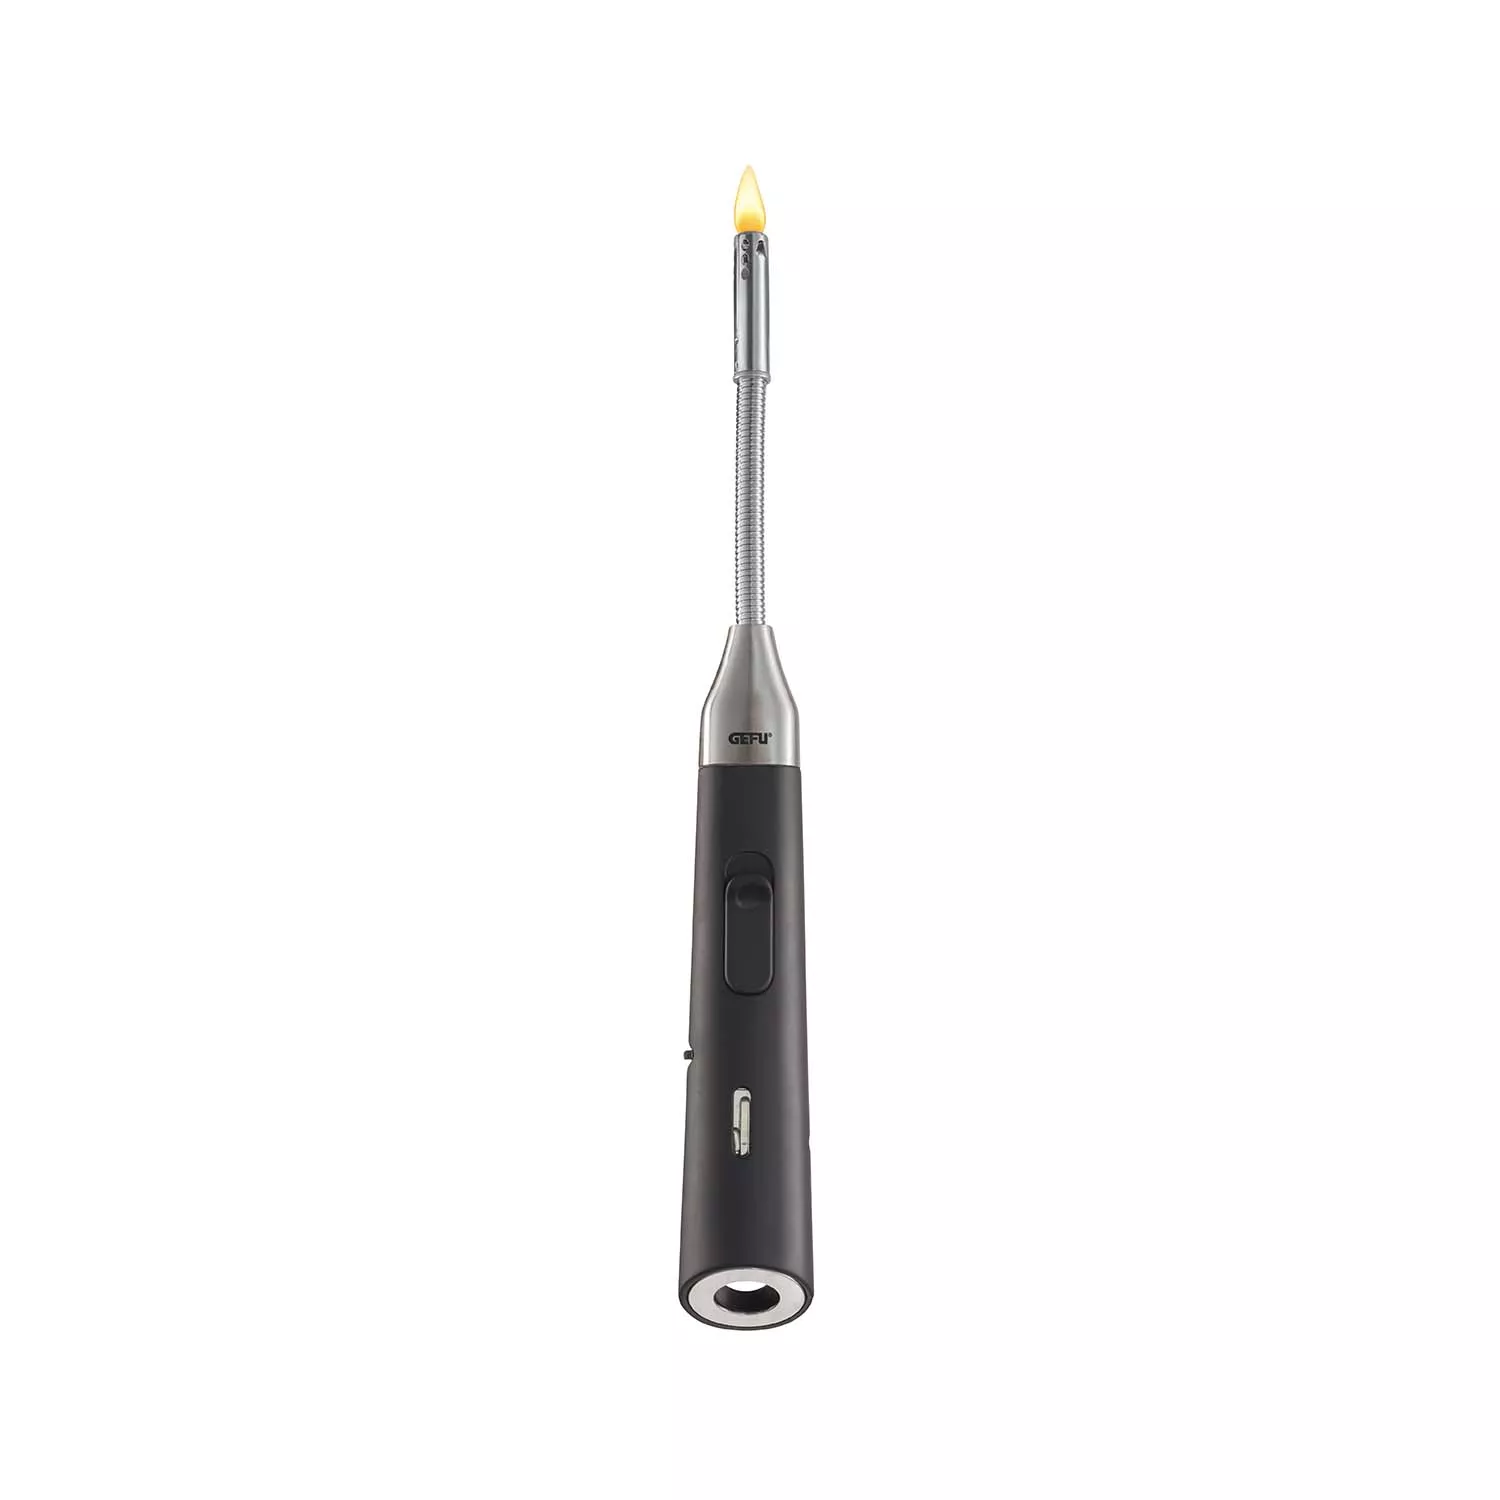 GEFU Long-Handled Lighter